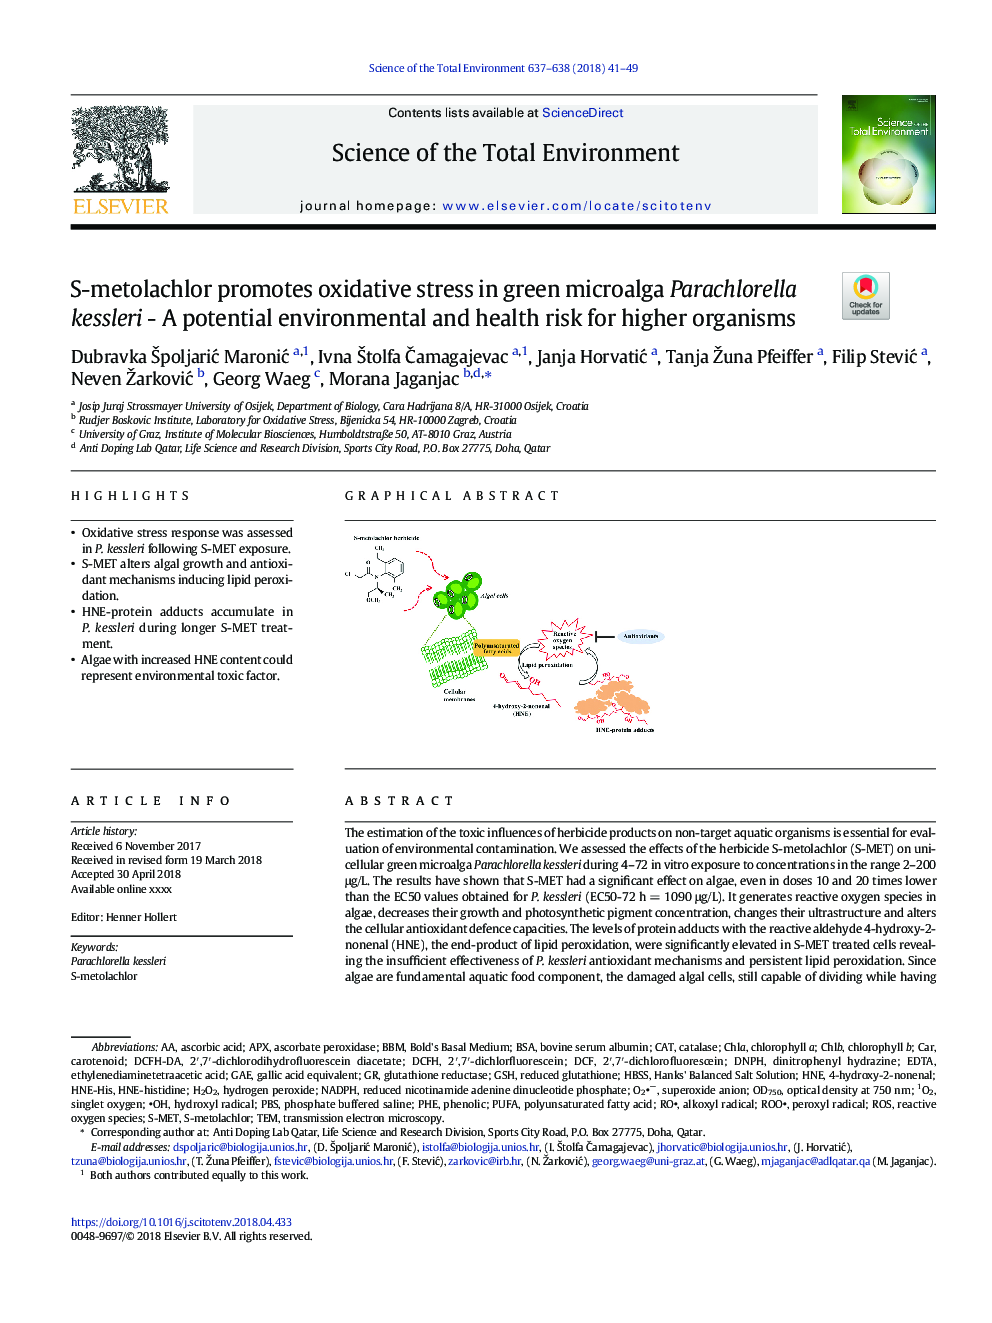 S-metolachlor promotes oxidative stress in green microalga Parachlorella kessleri - A potential environmental and health risk for higher organisms